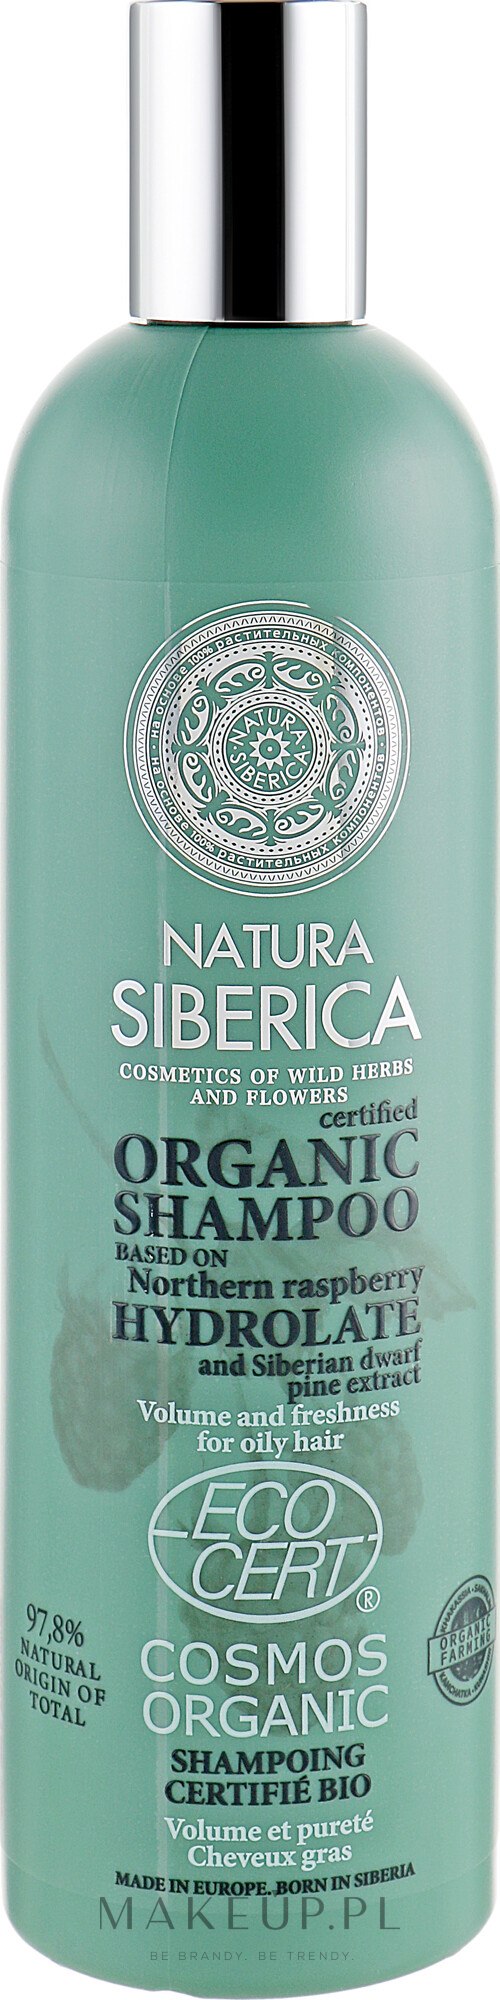 siberica szampon